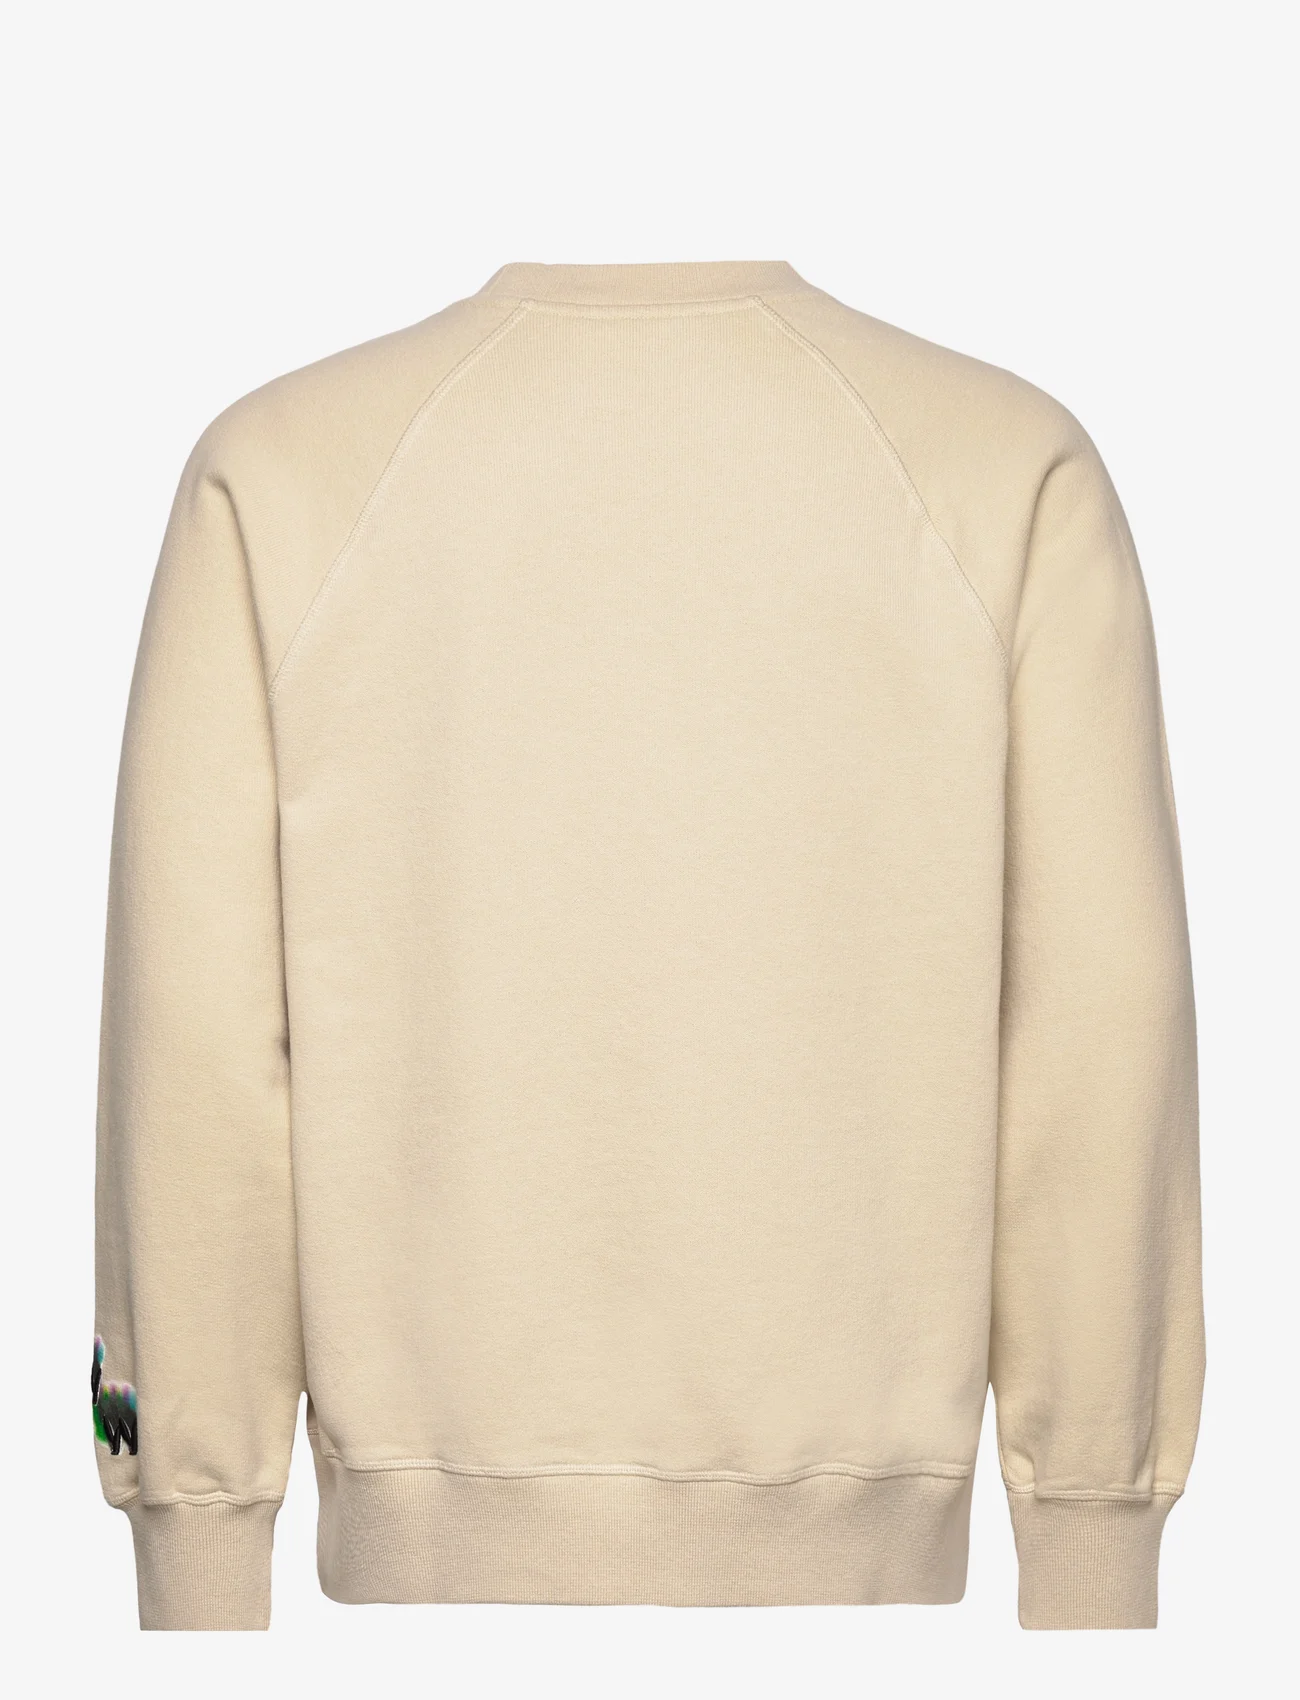 Wood Wood - Hester logo sweatshirt - kapuzenpullover - soft sand - 1